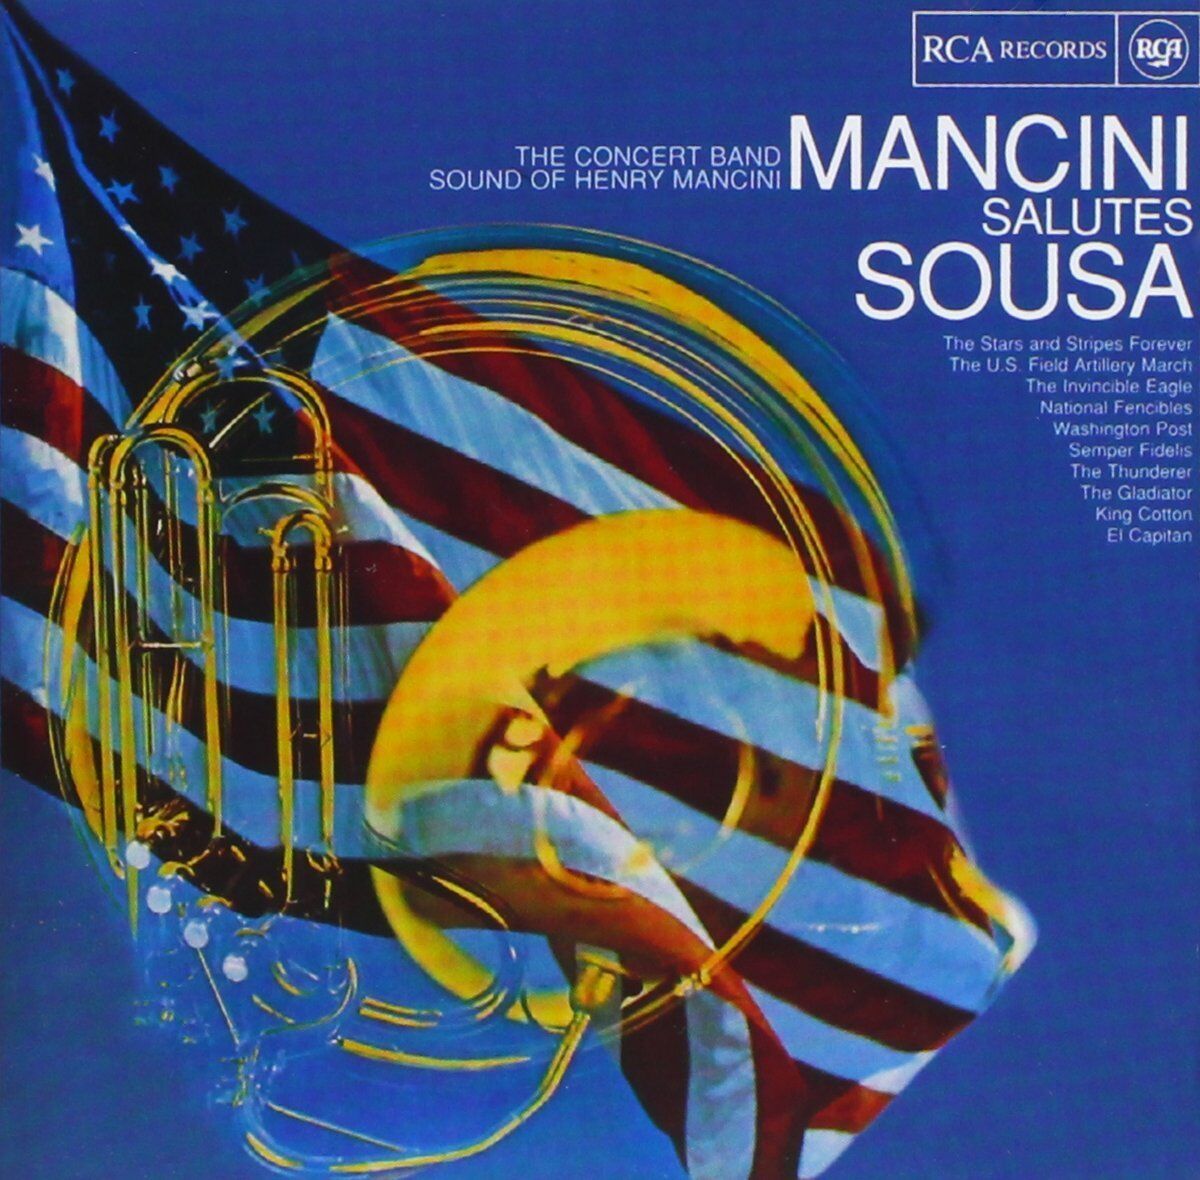 Henry Mancini MANCINI SALUTES SOUSA